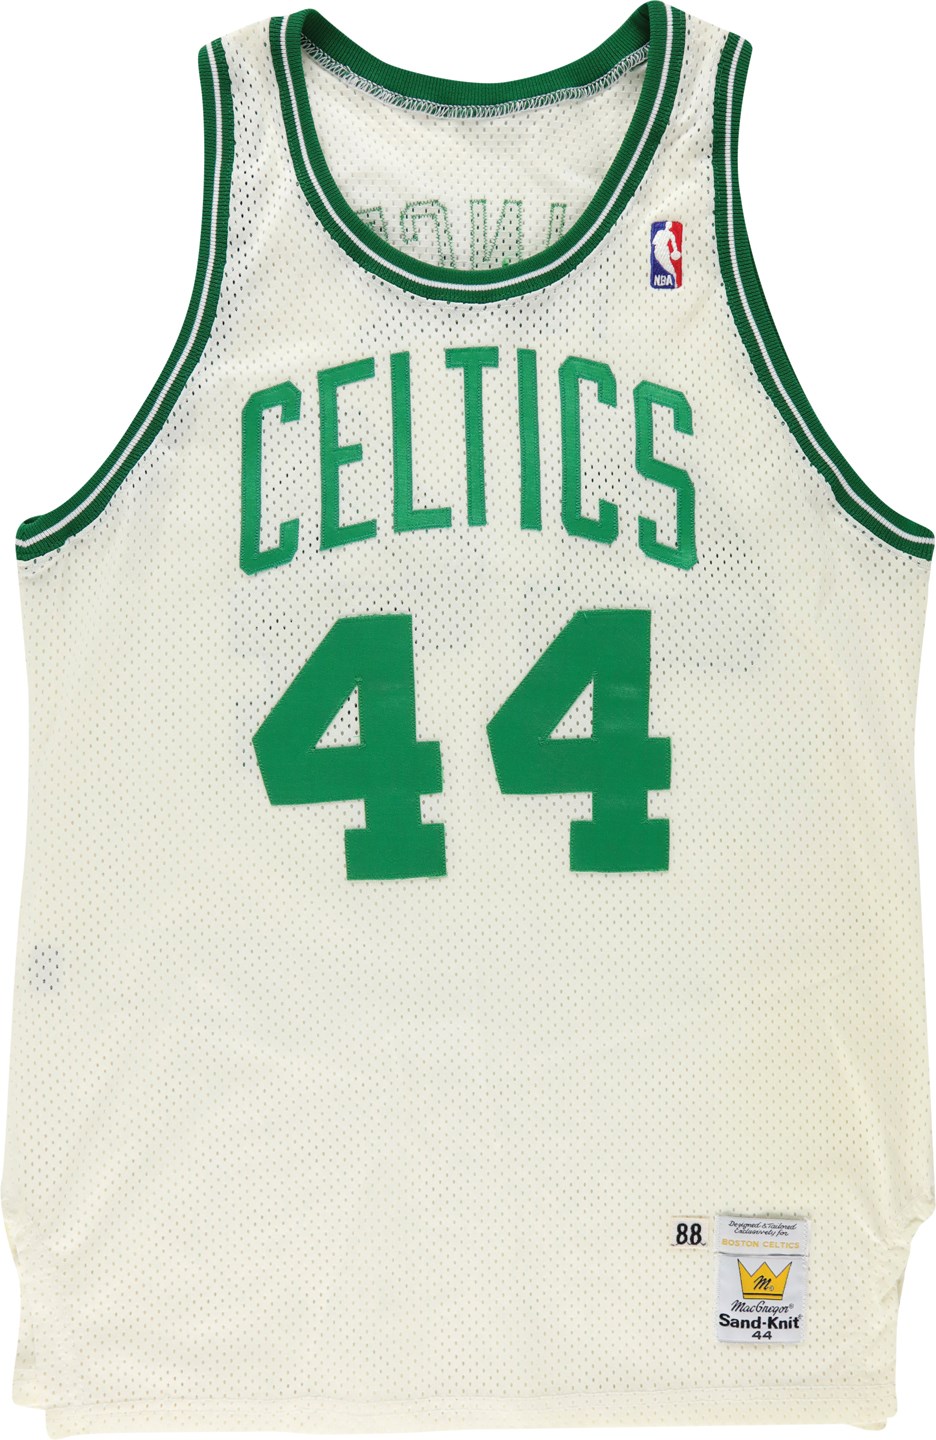 - 1988-89 Danny Ainge Boston Celtics Game Worn Jersey